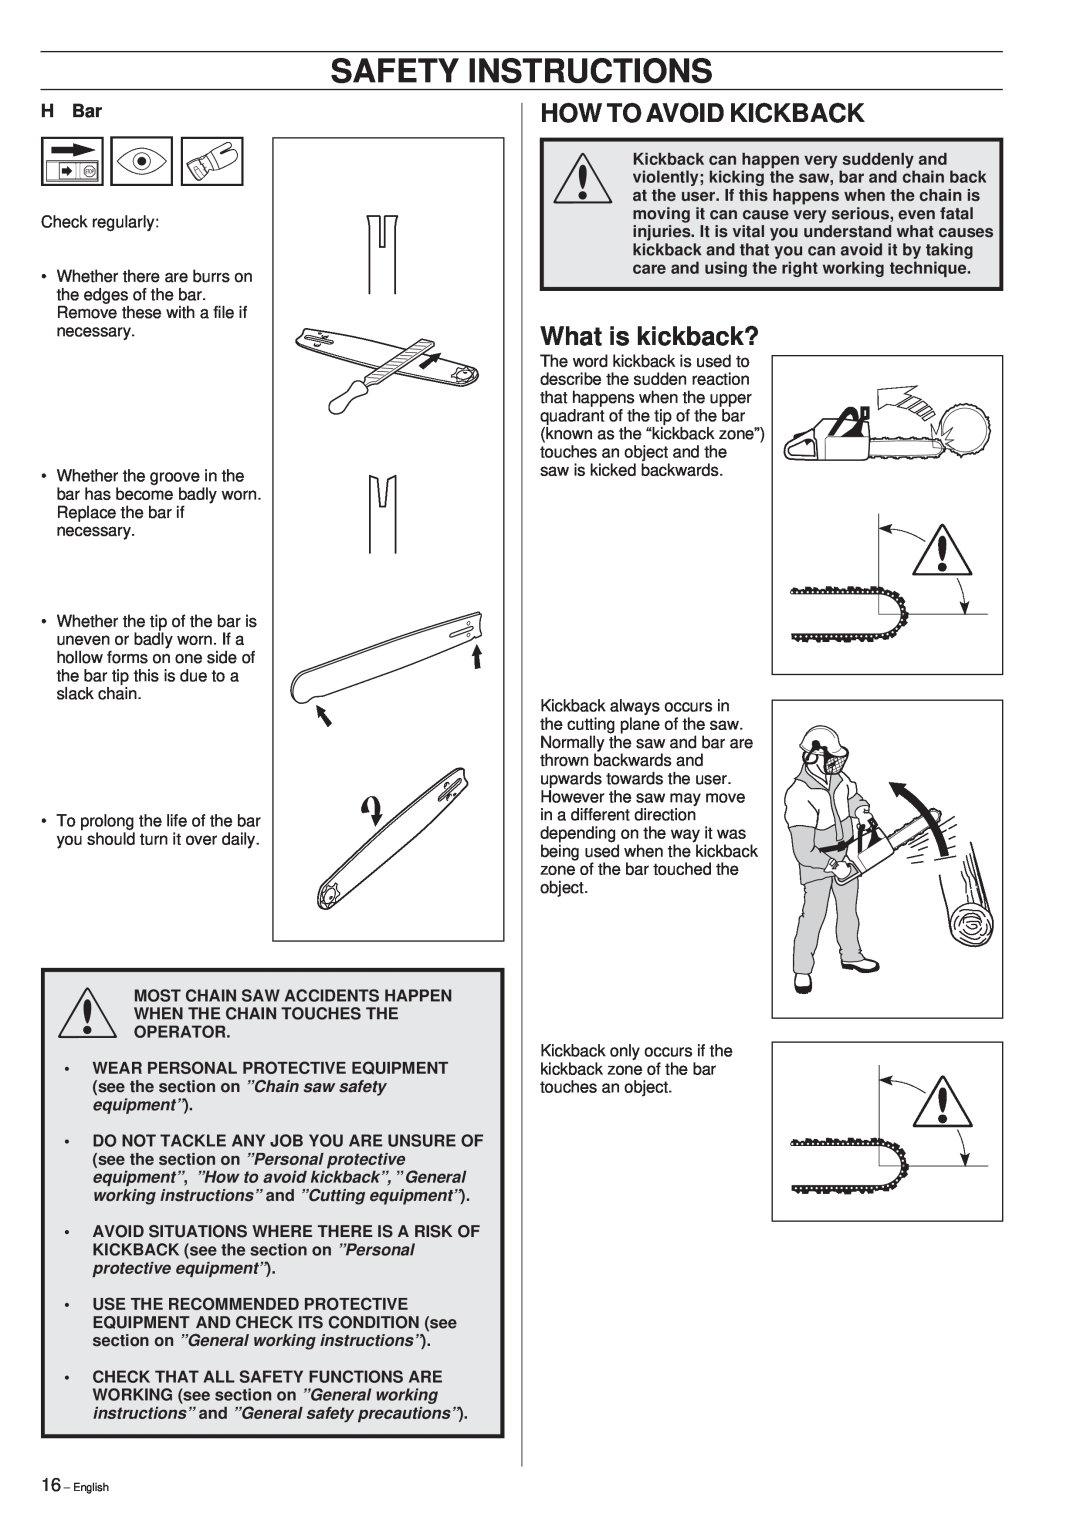 Husqvarna 45 manual Safety Instructions, How To Avoid Kickback, What is kickback?, H Bar 